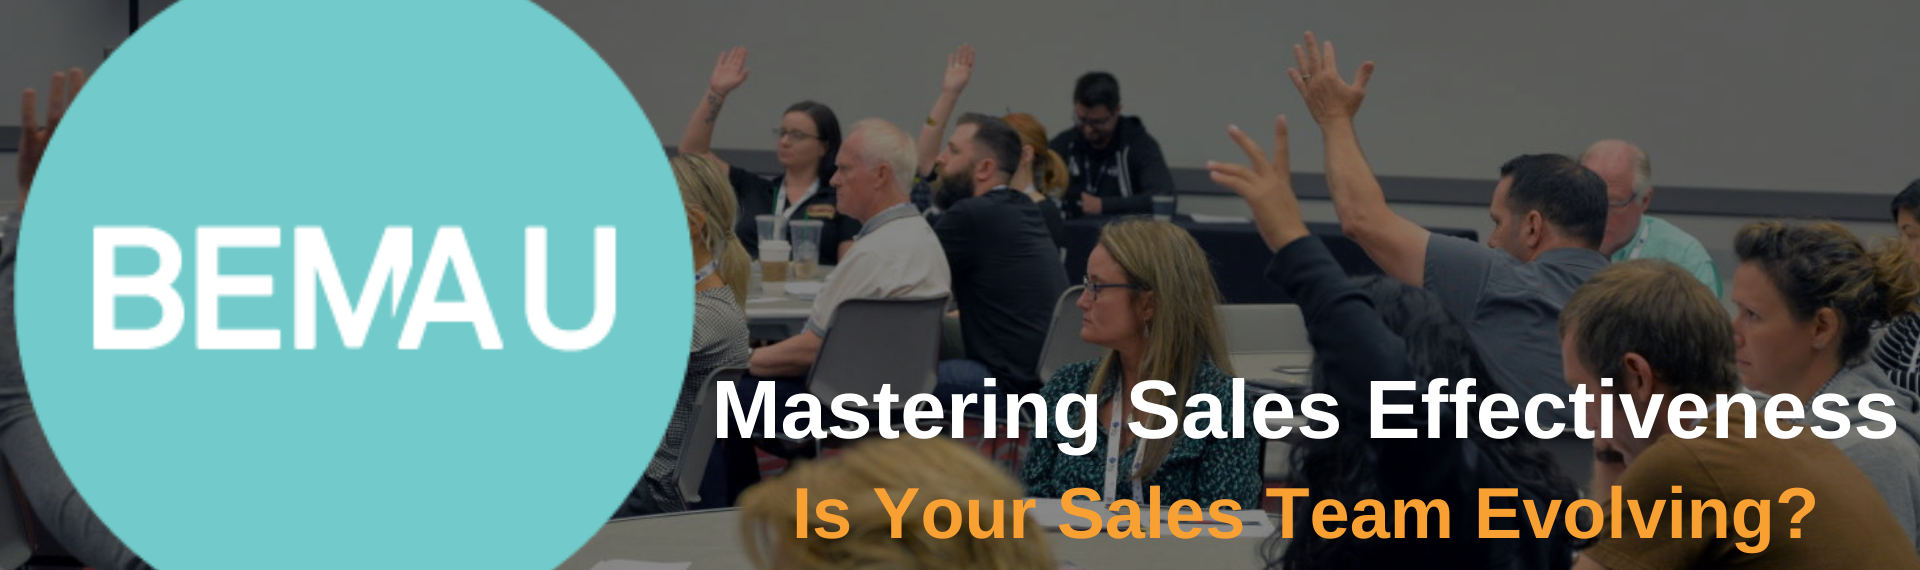 Mastering Sales Effectiveness